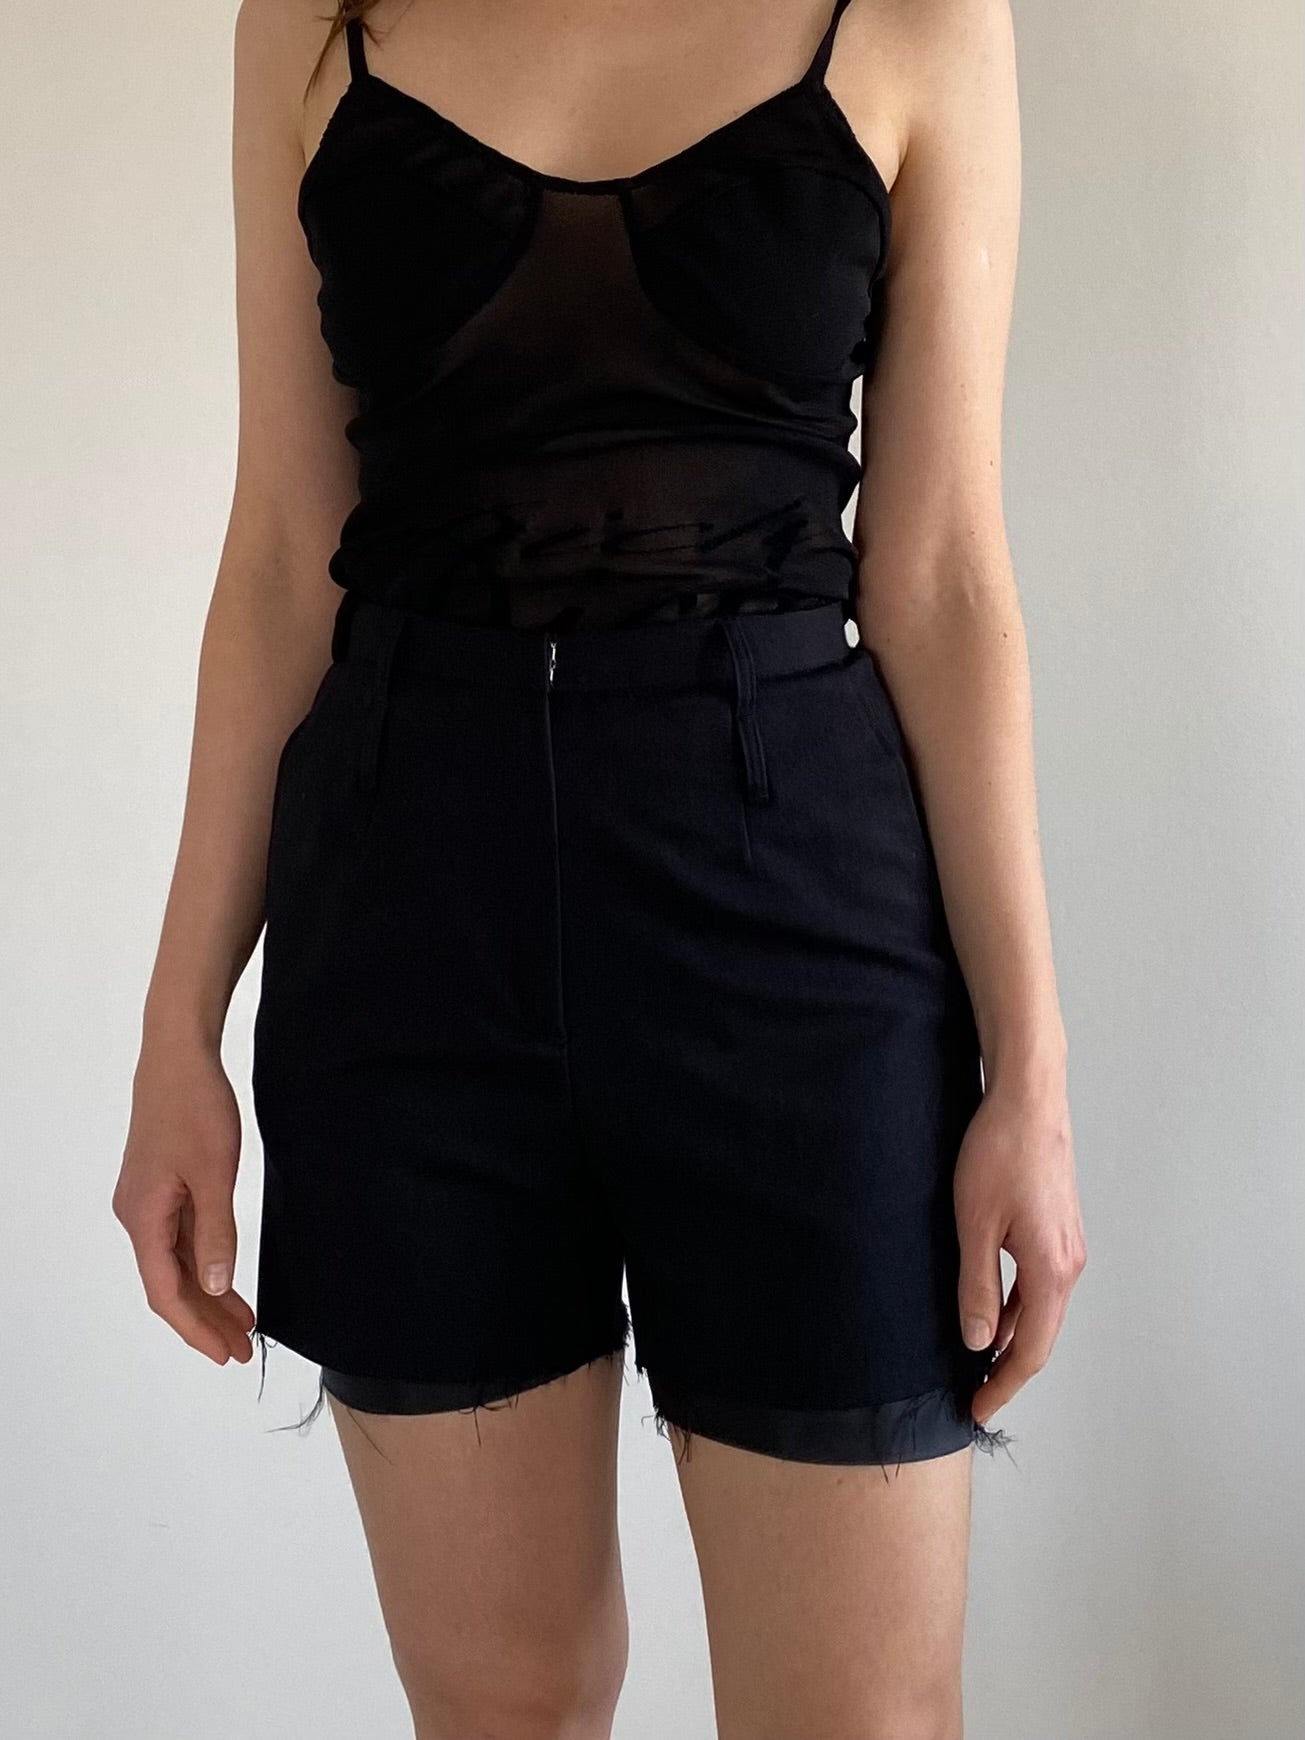 Untrimmed shorts (black) – DICH HENDERSON